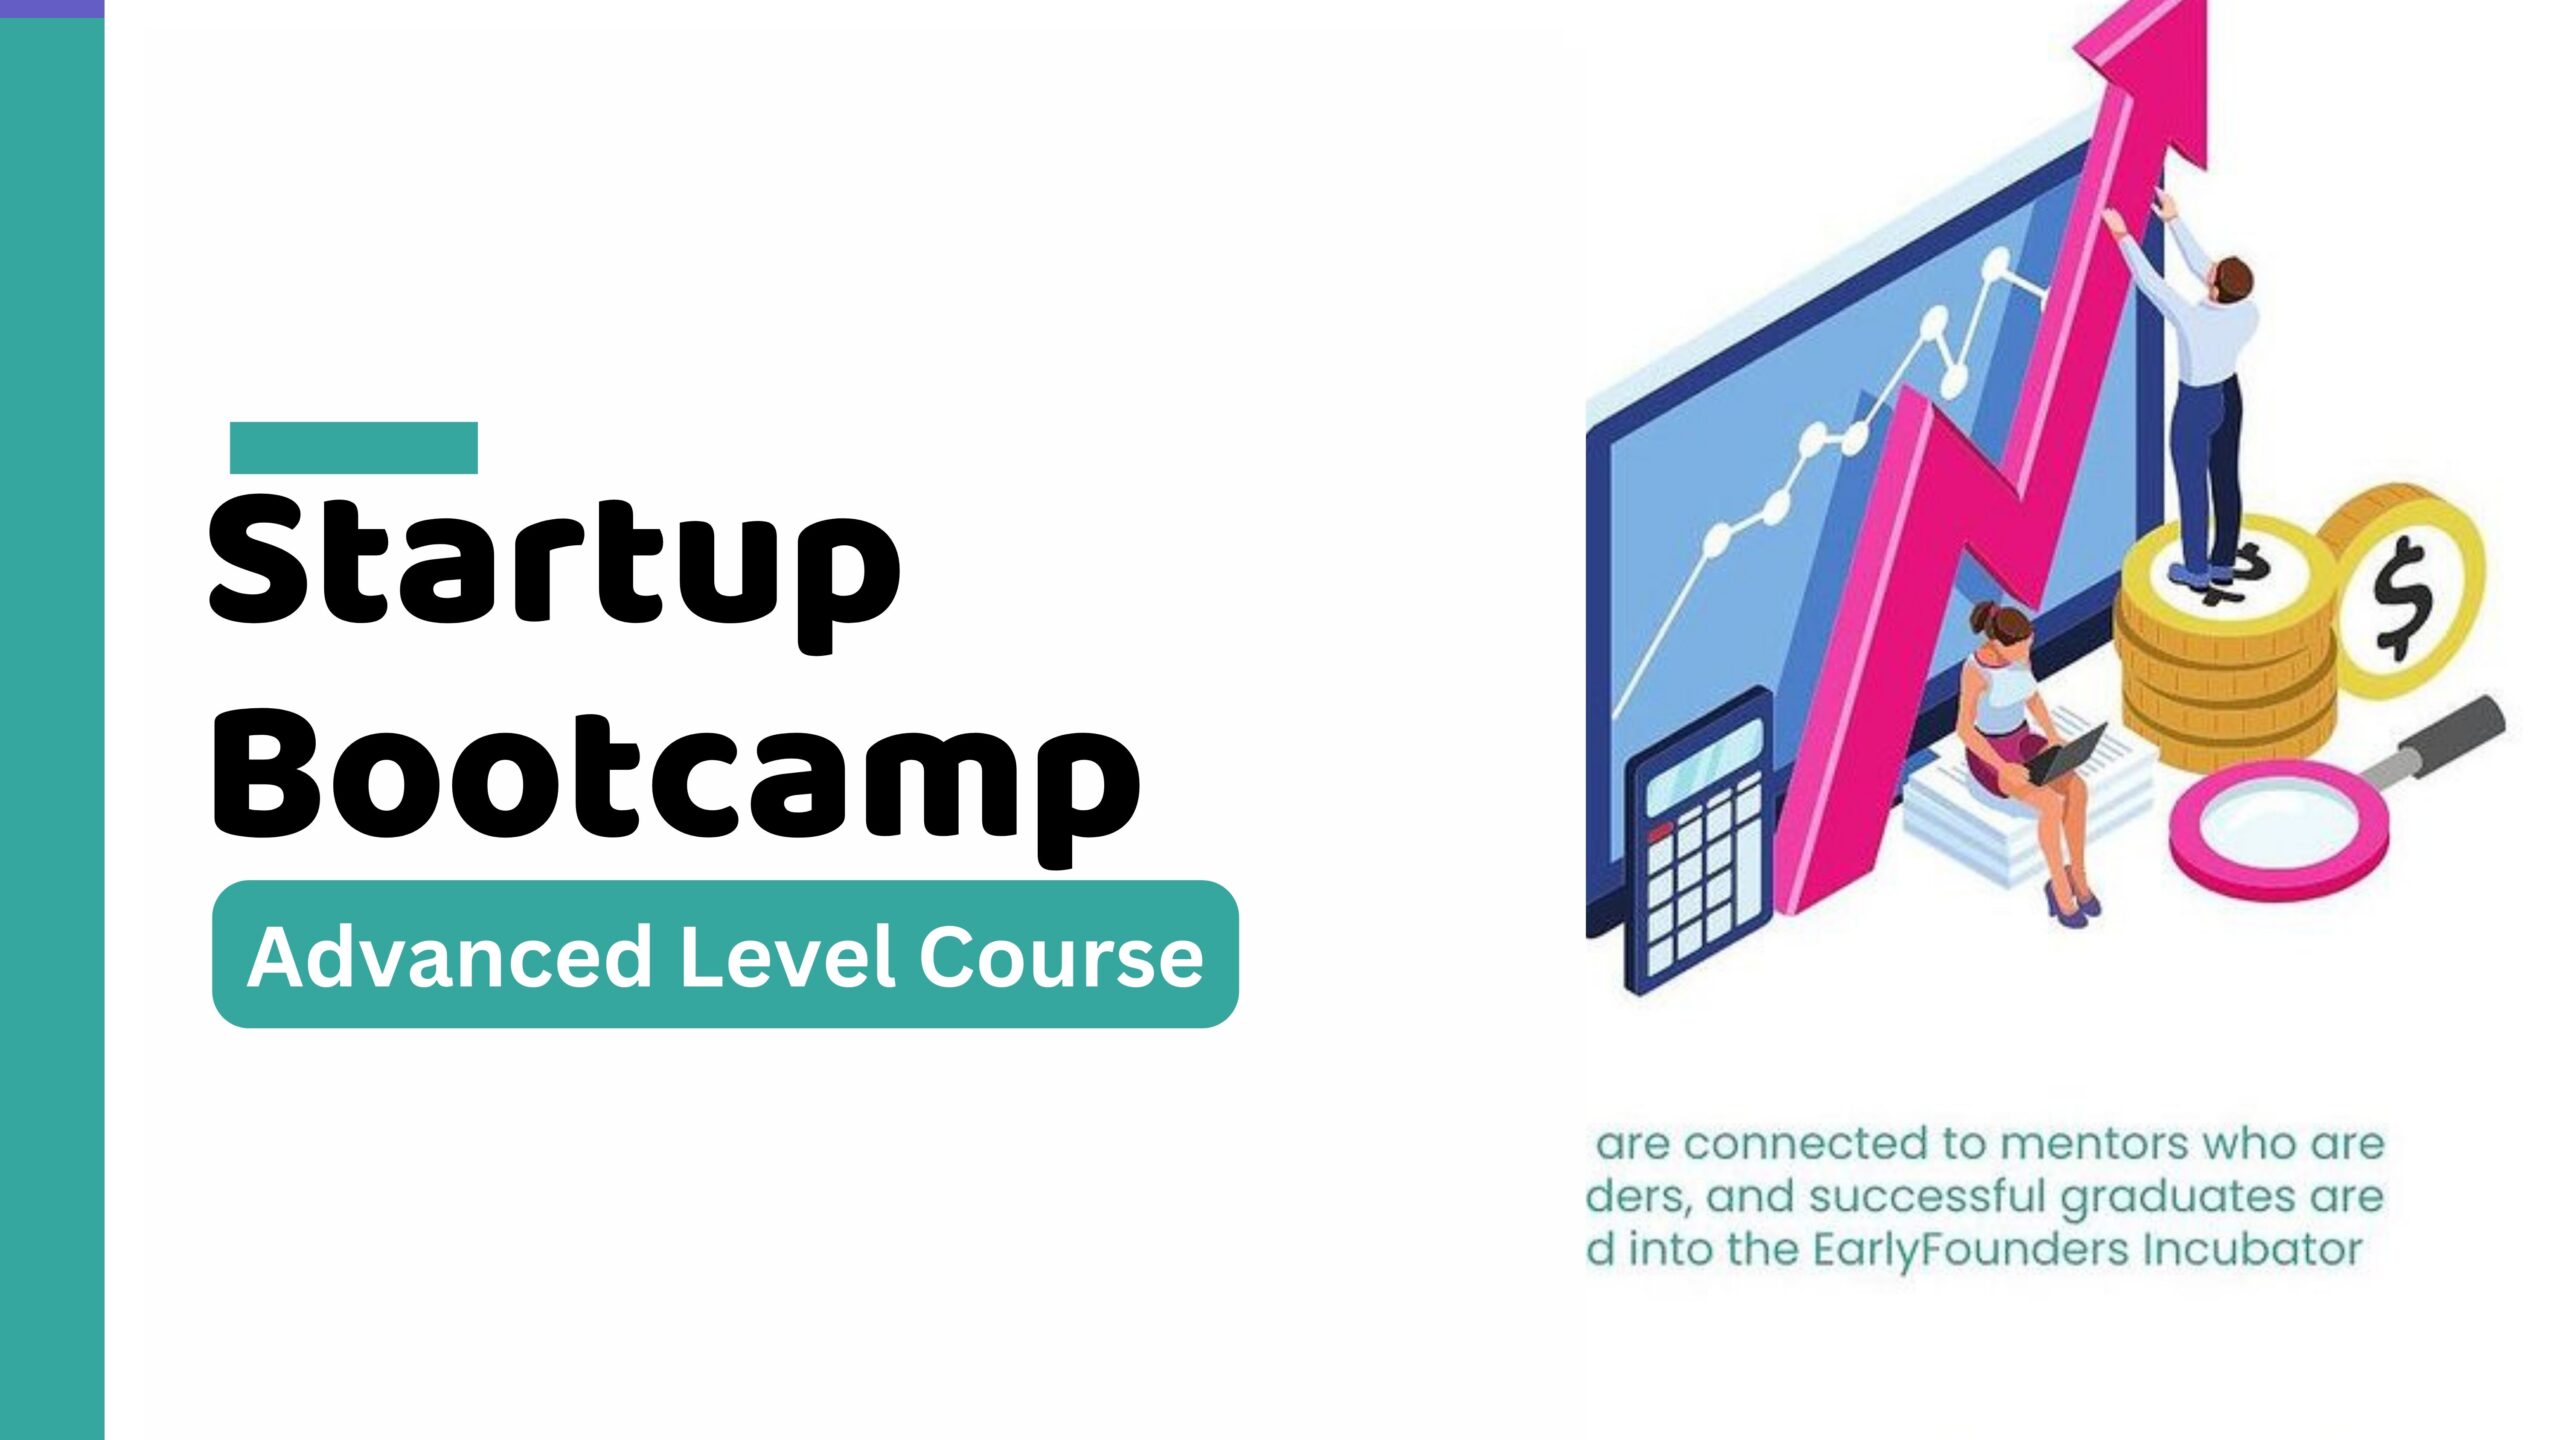 StartUp Bootcamp